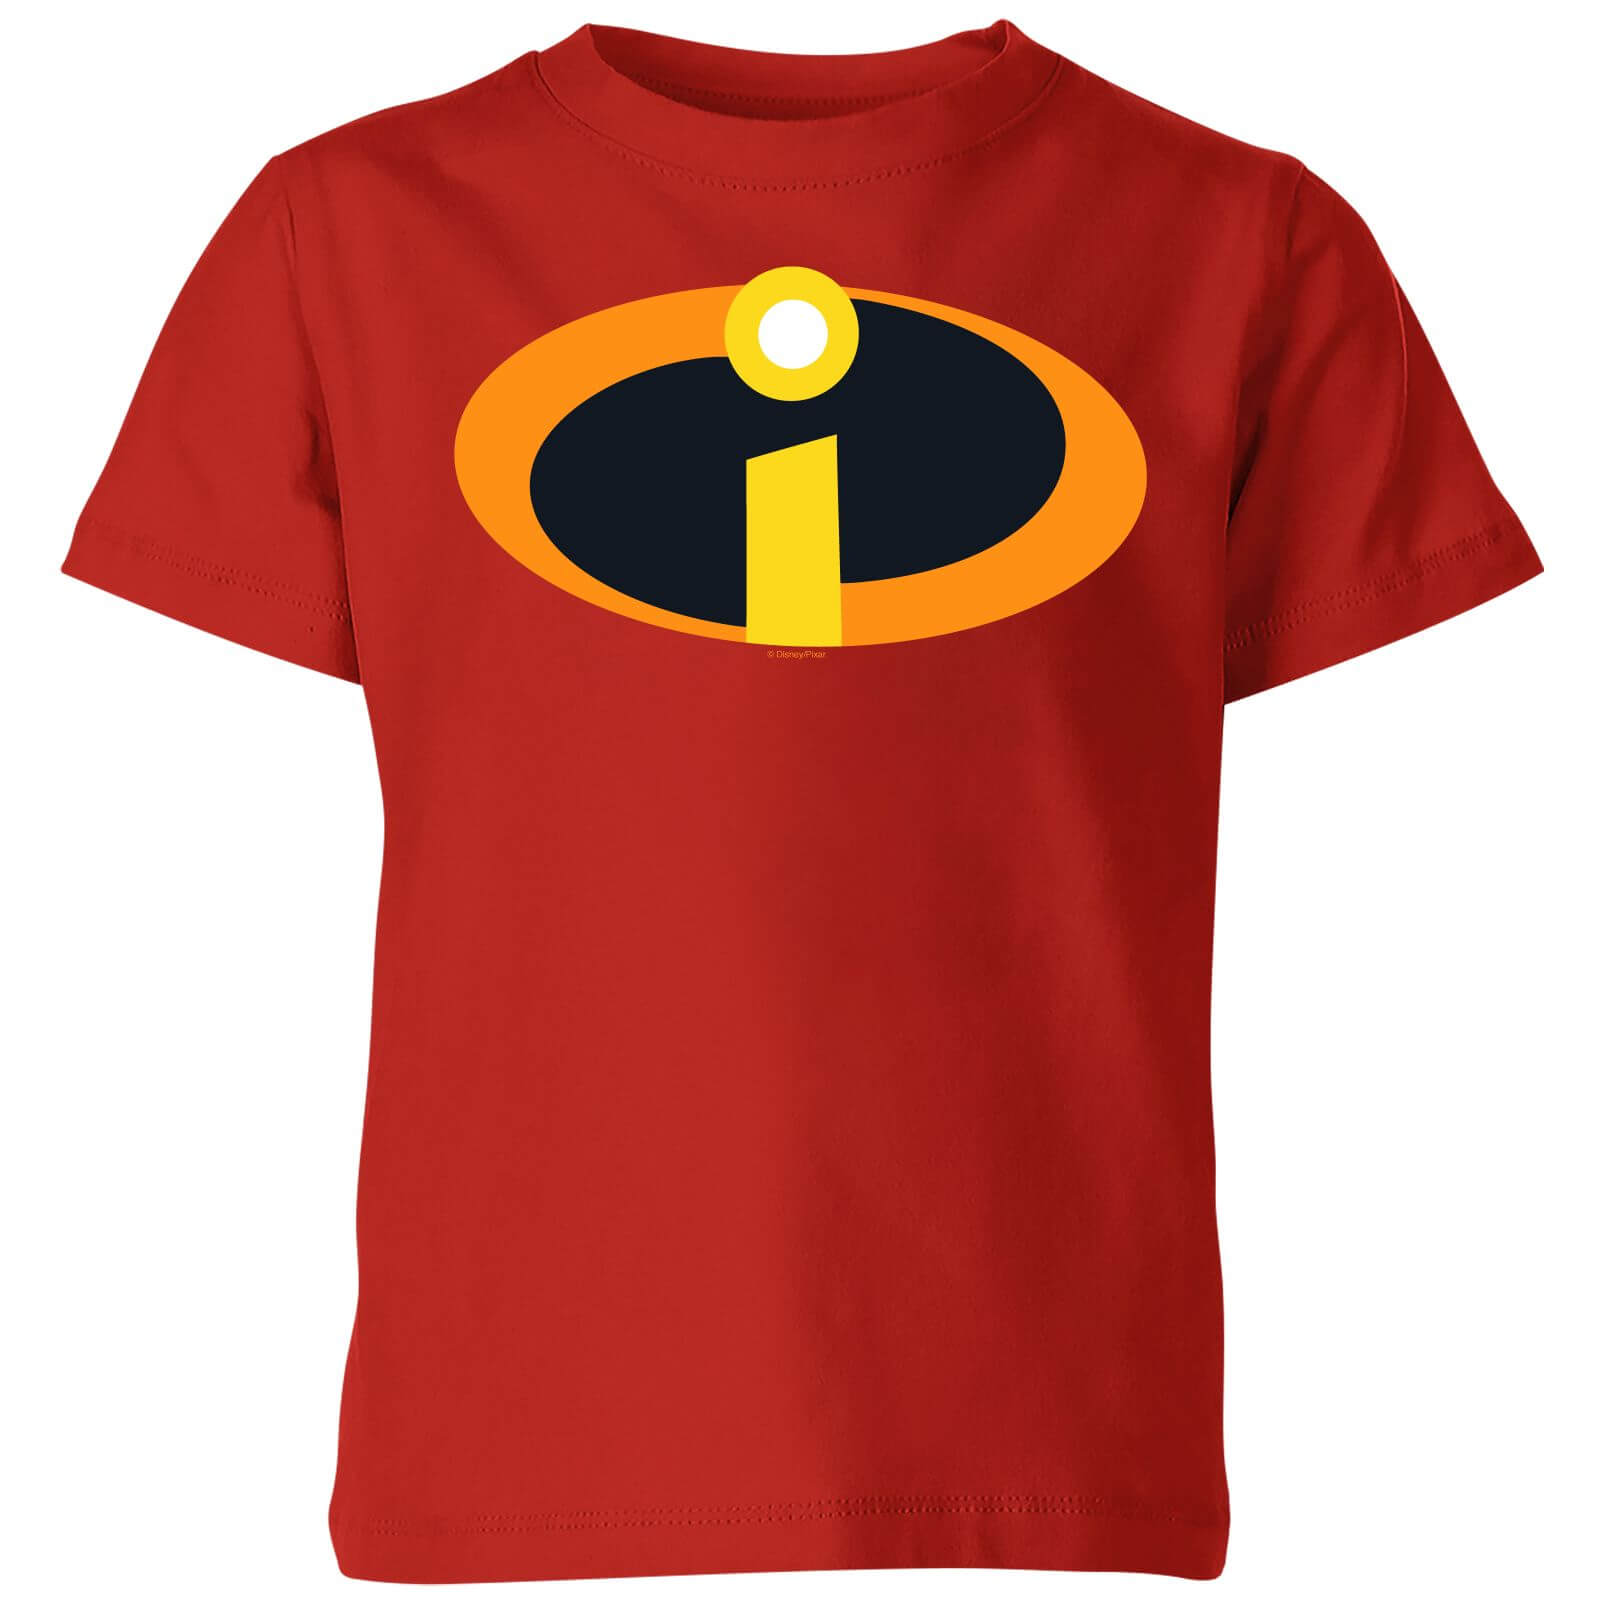 Incredibles 2 Logo Kids' T-Shirt - Red - 5-6 Years